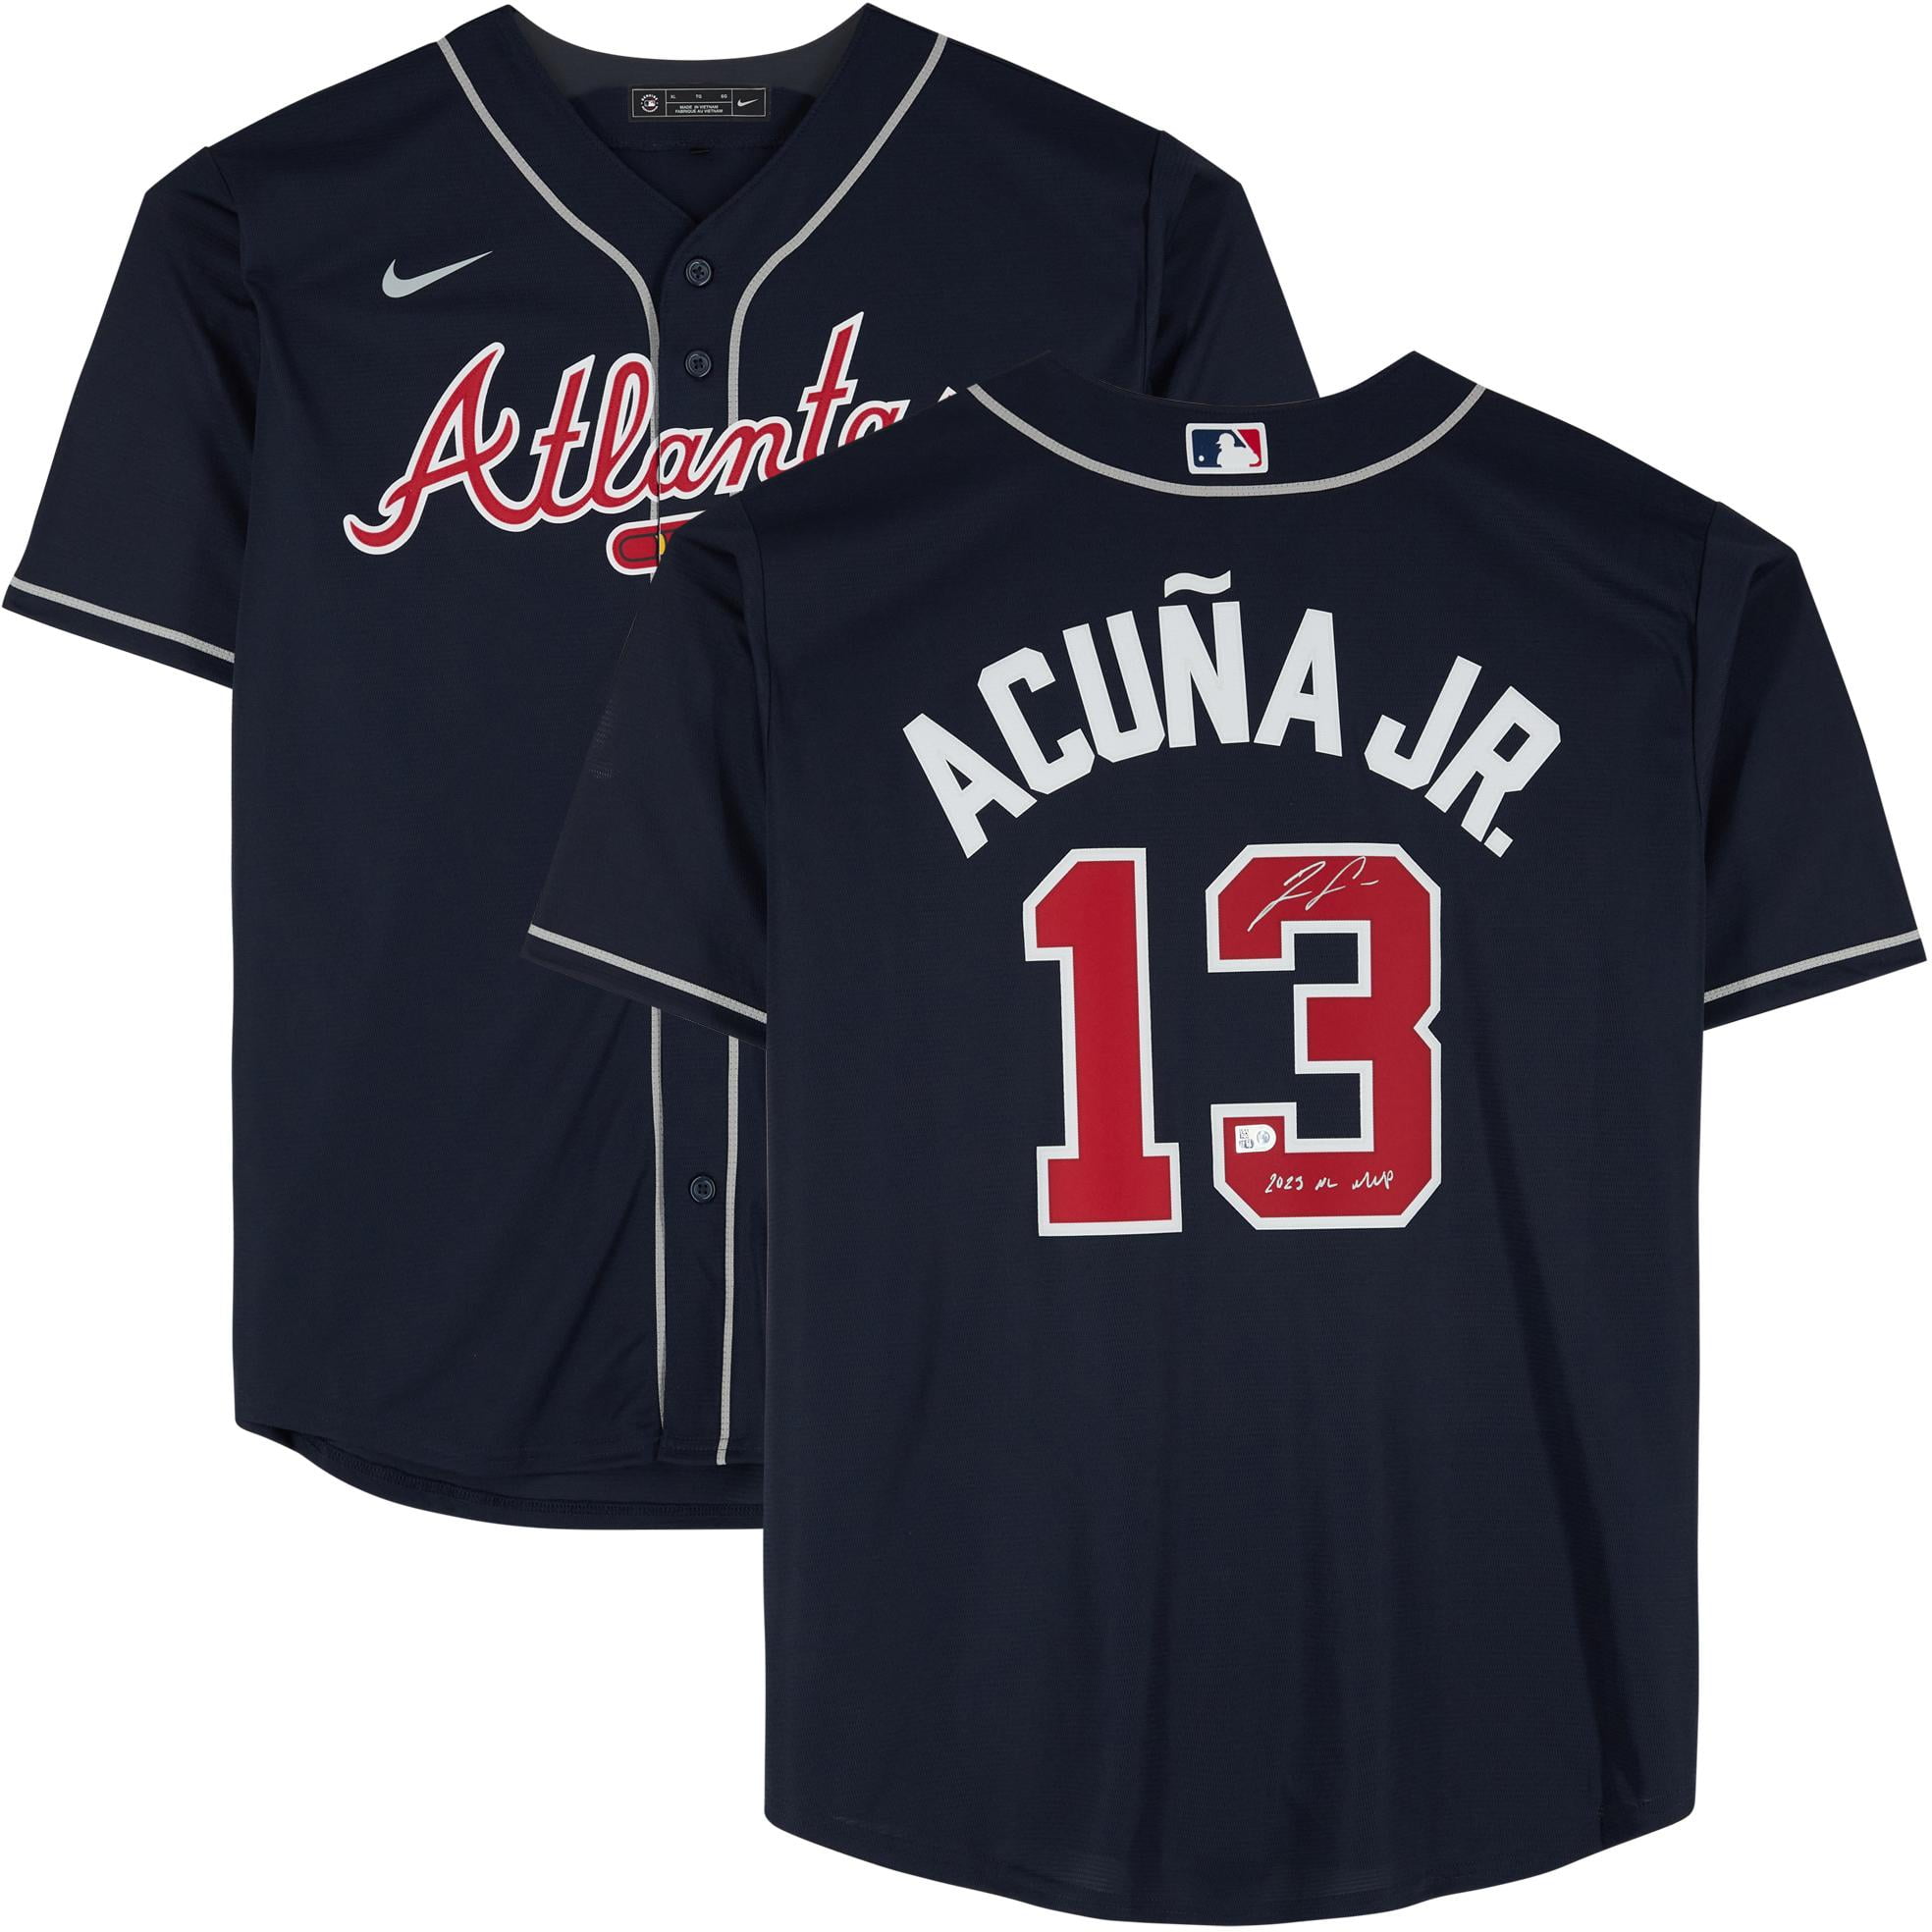 Atlanta Braves Ronald Acuna Jr. Navy Authentic 2020 Alternate Jersey